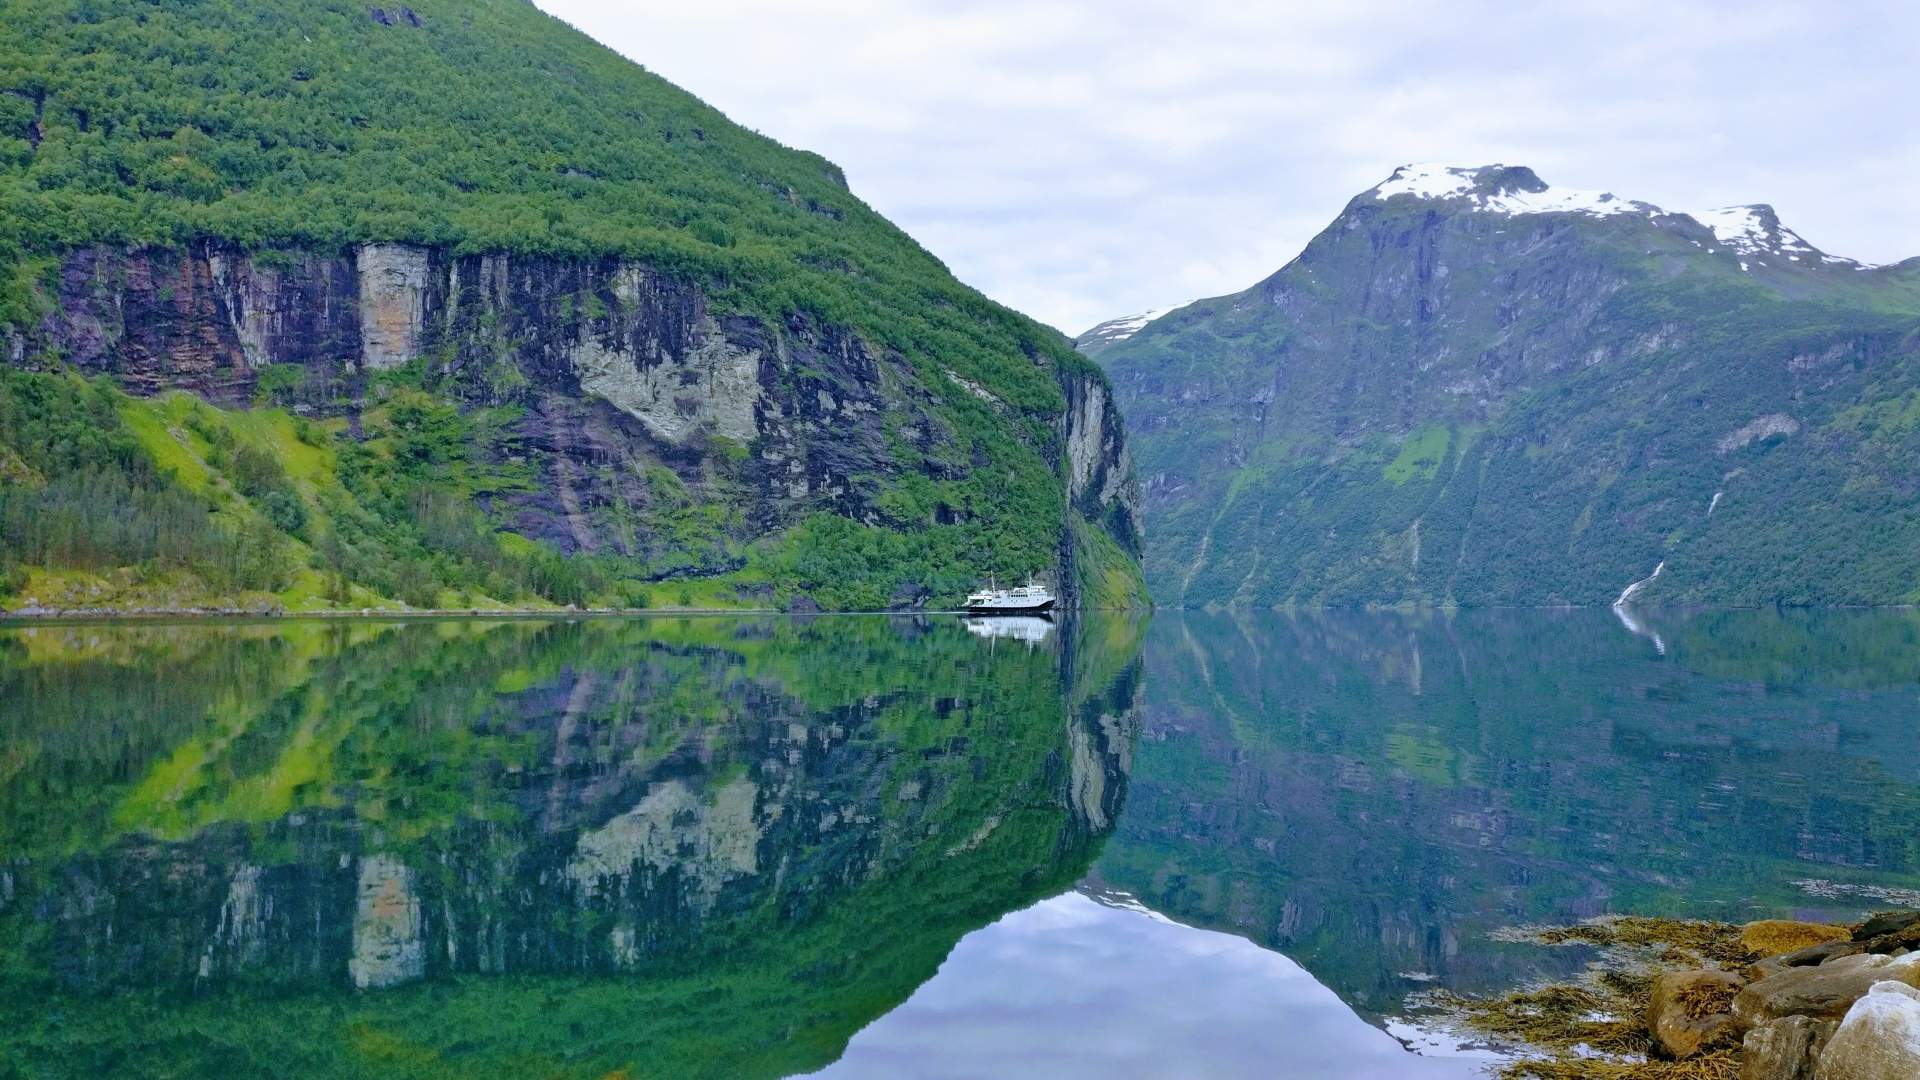 Busreis Noorwegen rondreis - Geirangerfjord ©Fredrik Sandgren from Pixabay